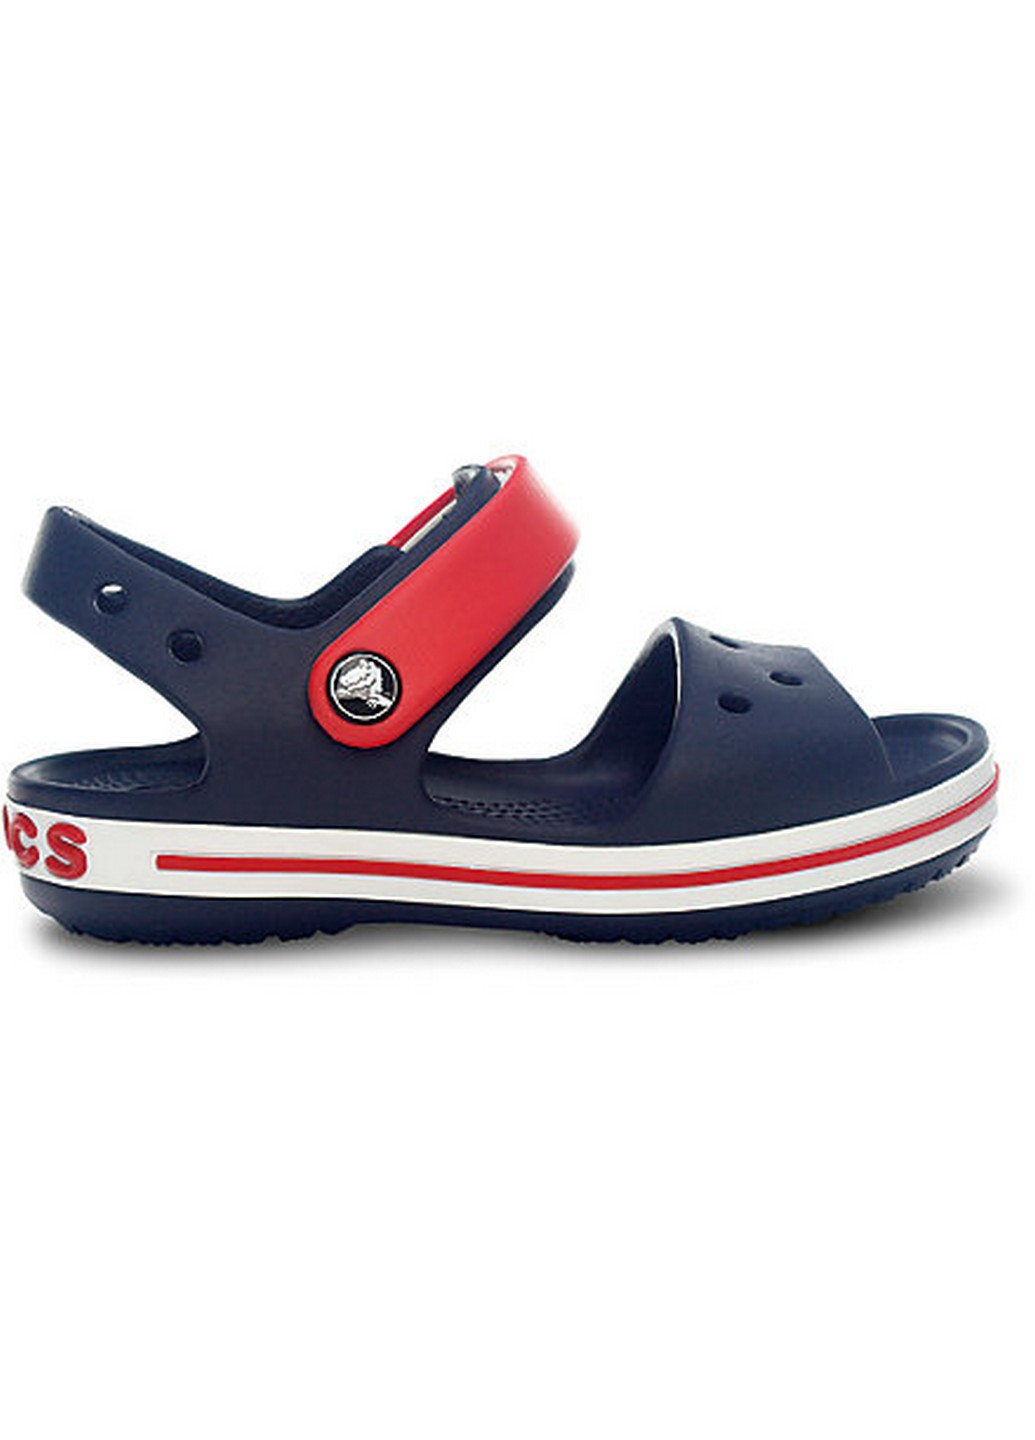 Крокс Сандалі Crocs crocband sandal navy/red (259469071)